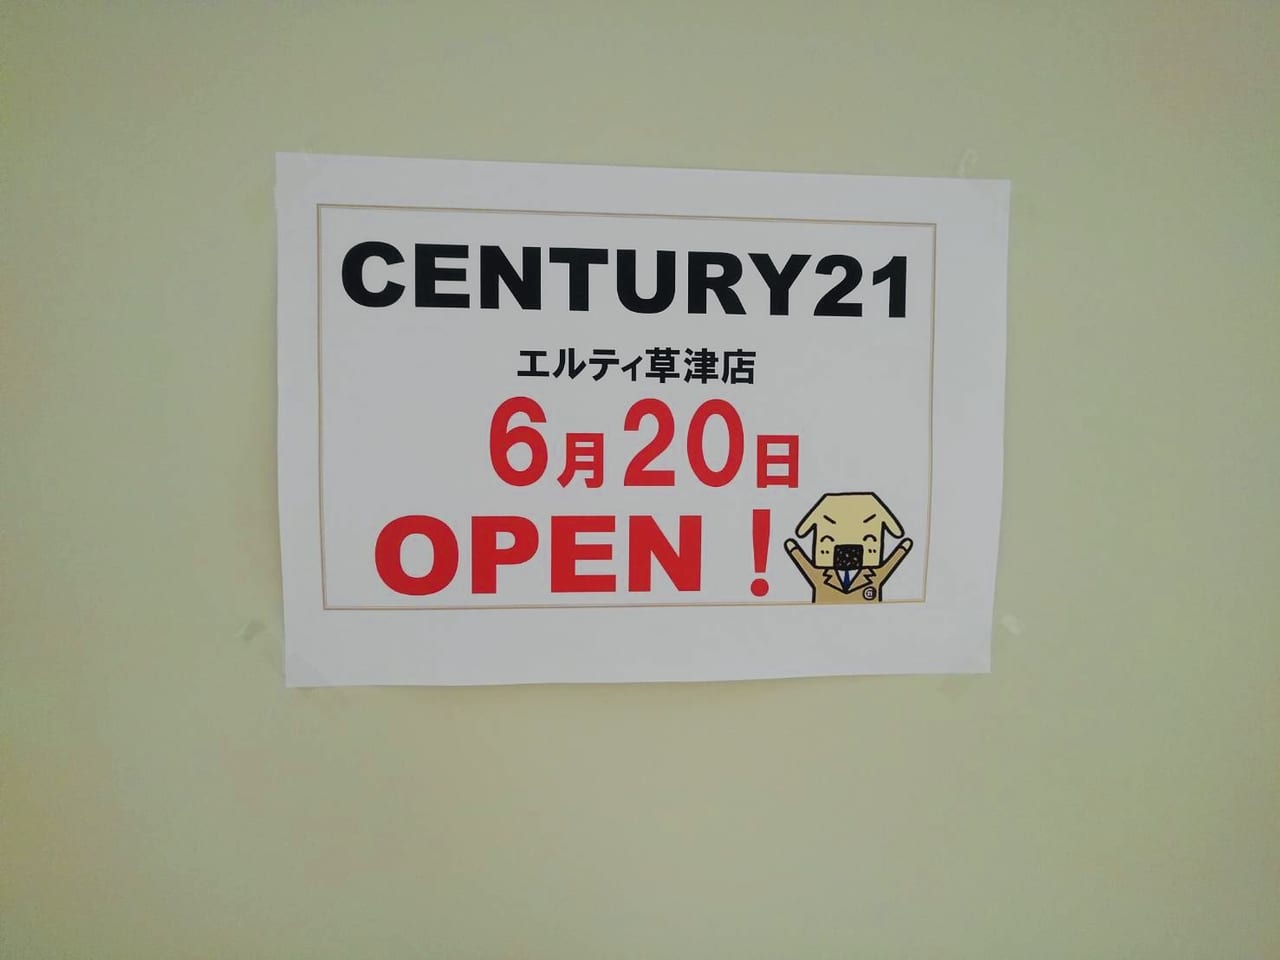 century21 6-20